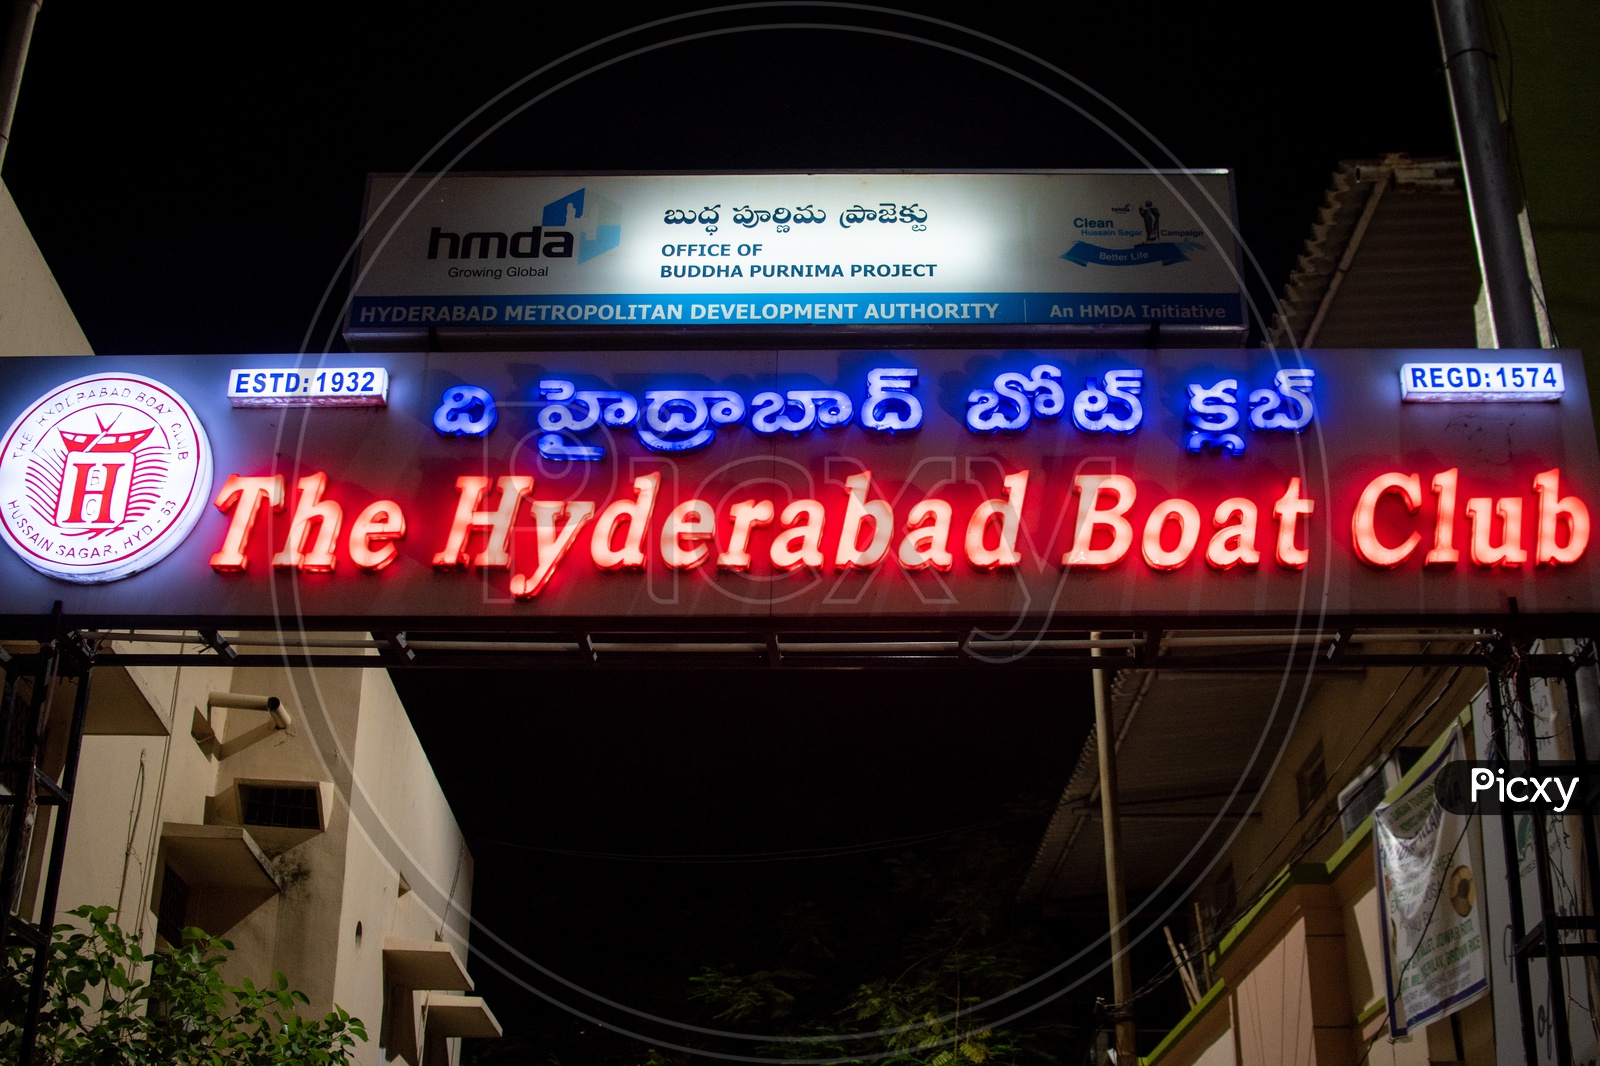 The Hyderabad Boat Club